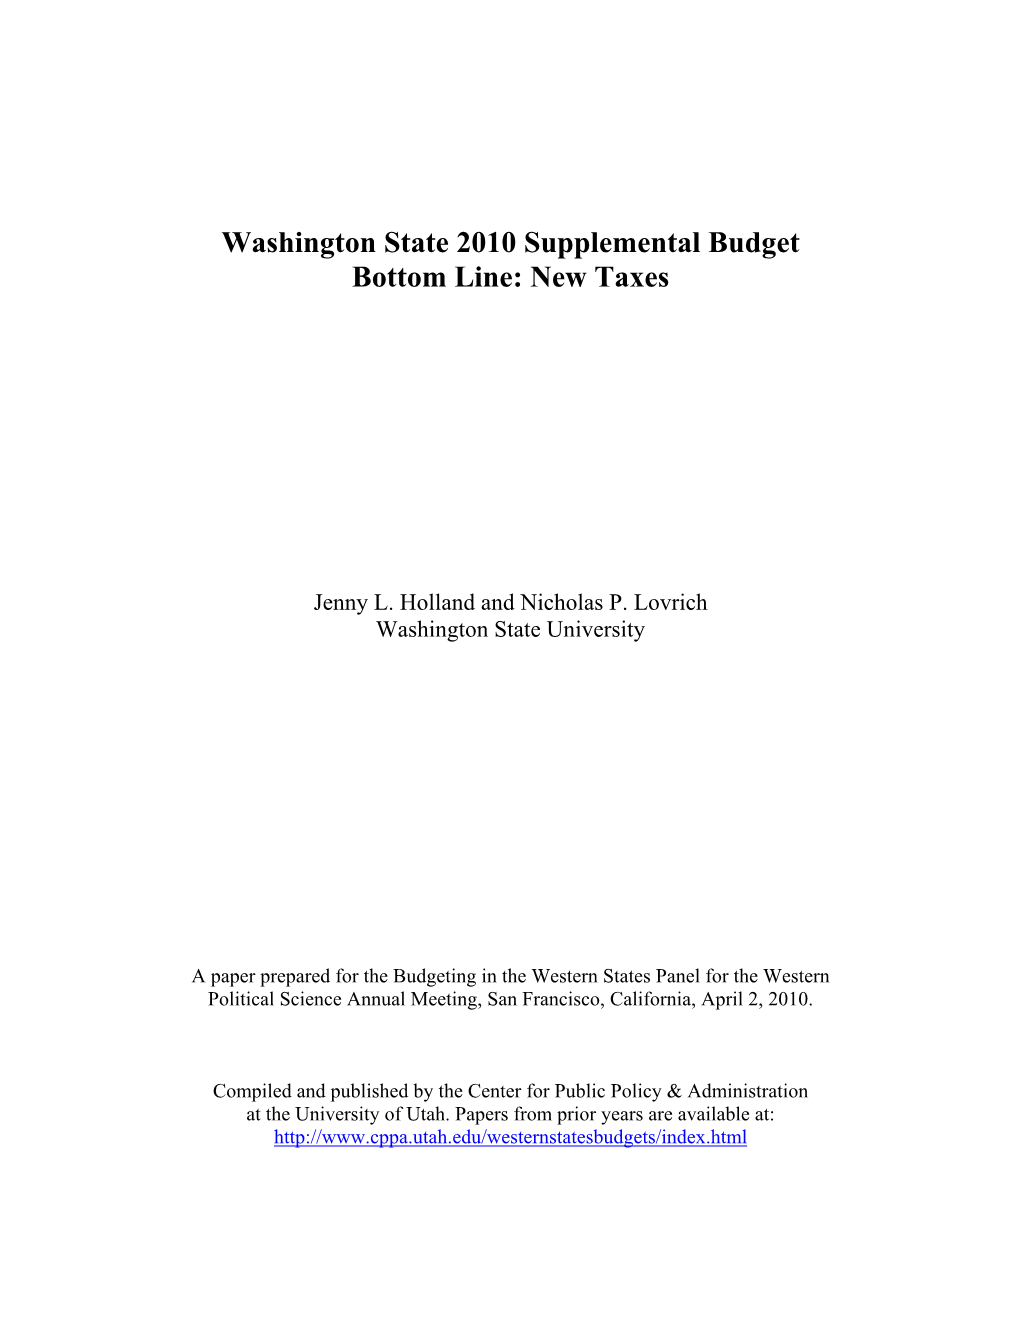 Washington State 2010 Supplemental Budget Bottom Line: New Taxes